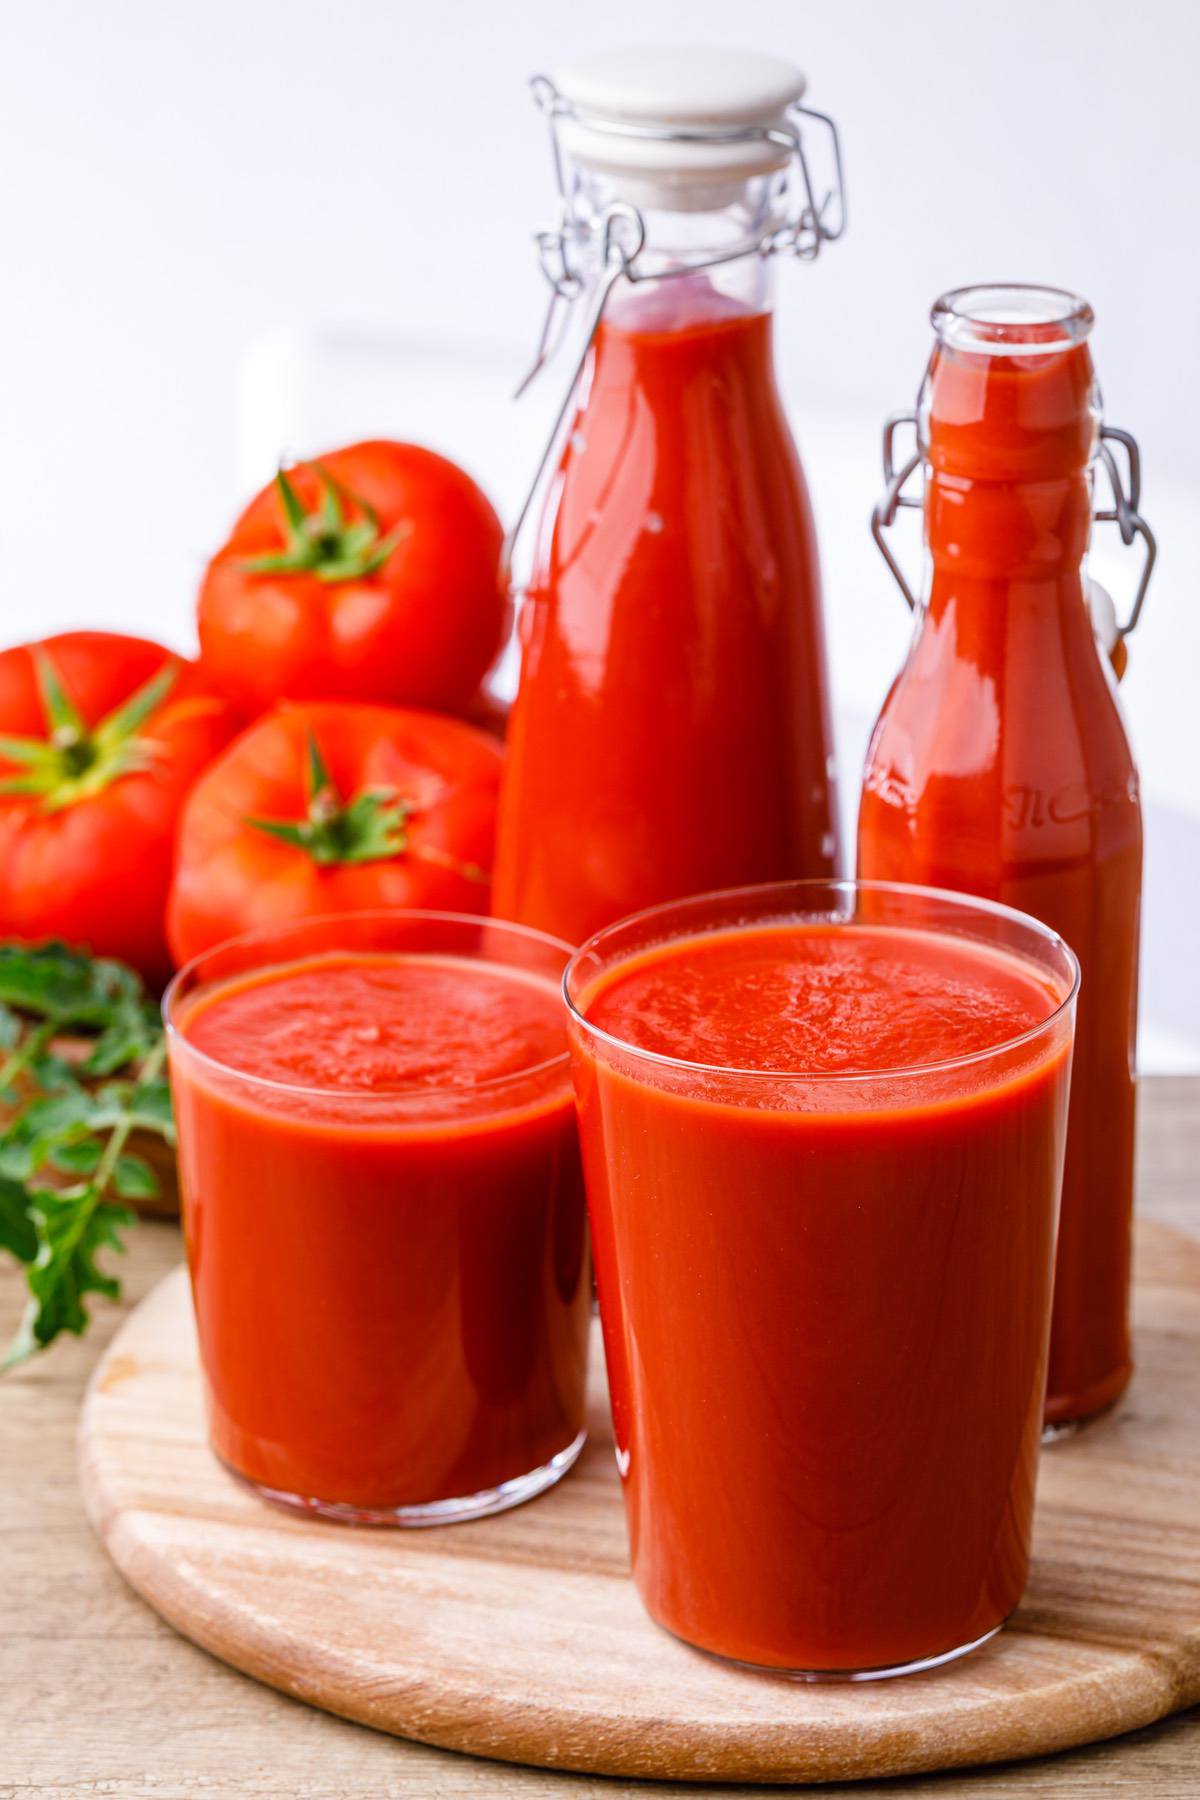 Tomato juice recipe